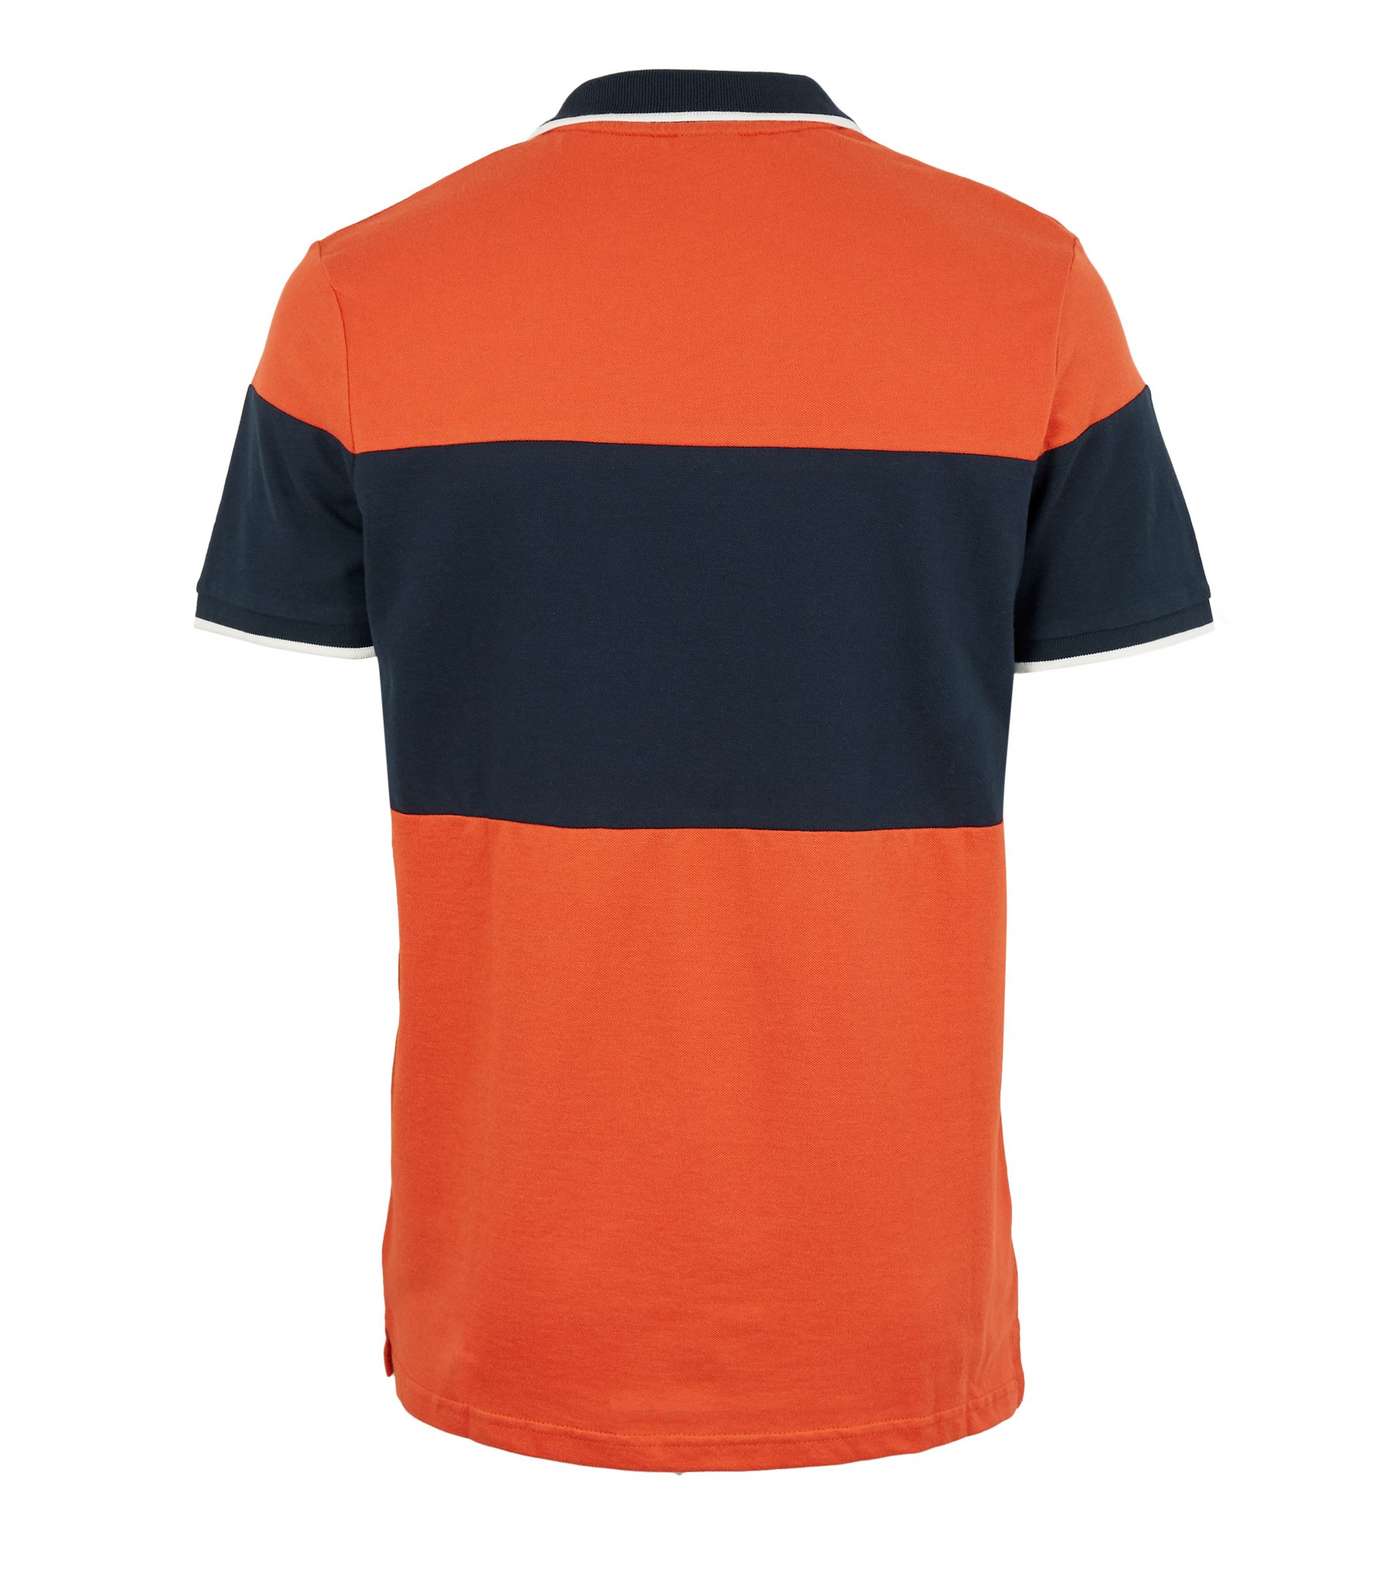 Jack & Jones Orange Contrast Stripe Polo Shirt Image 2